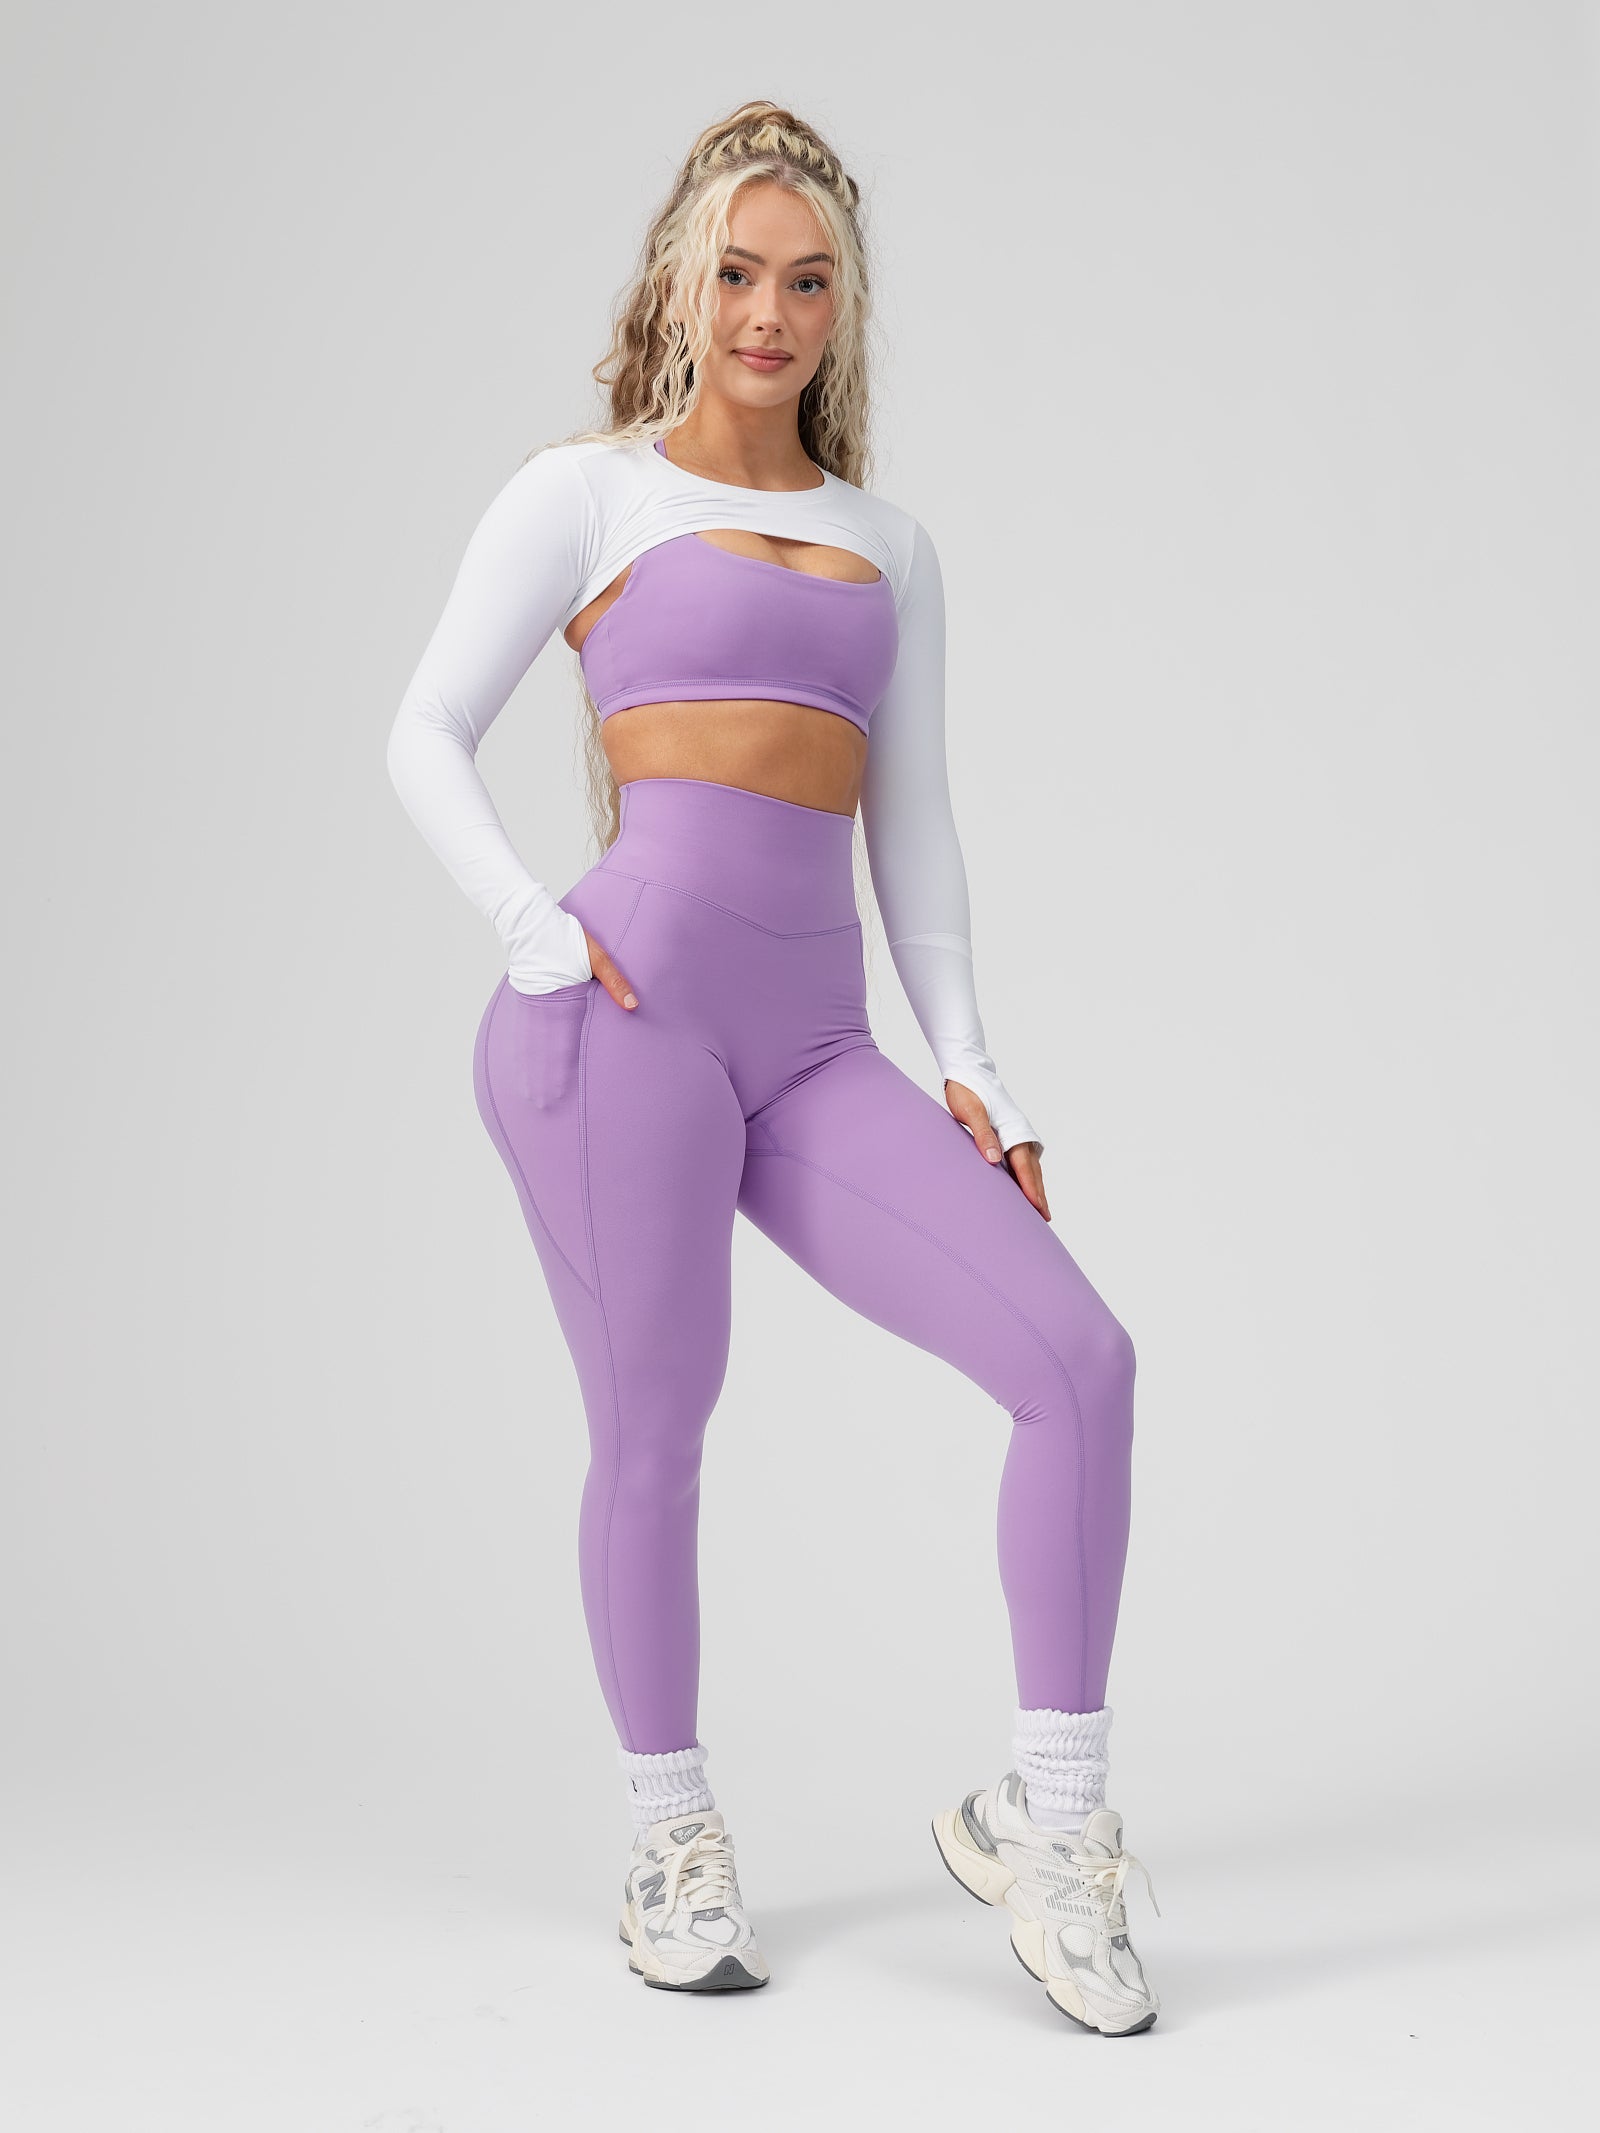 Buffbunny Leggings Yoga 3 Line High Waist Elastic Women Fitness